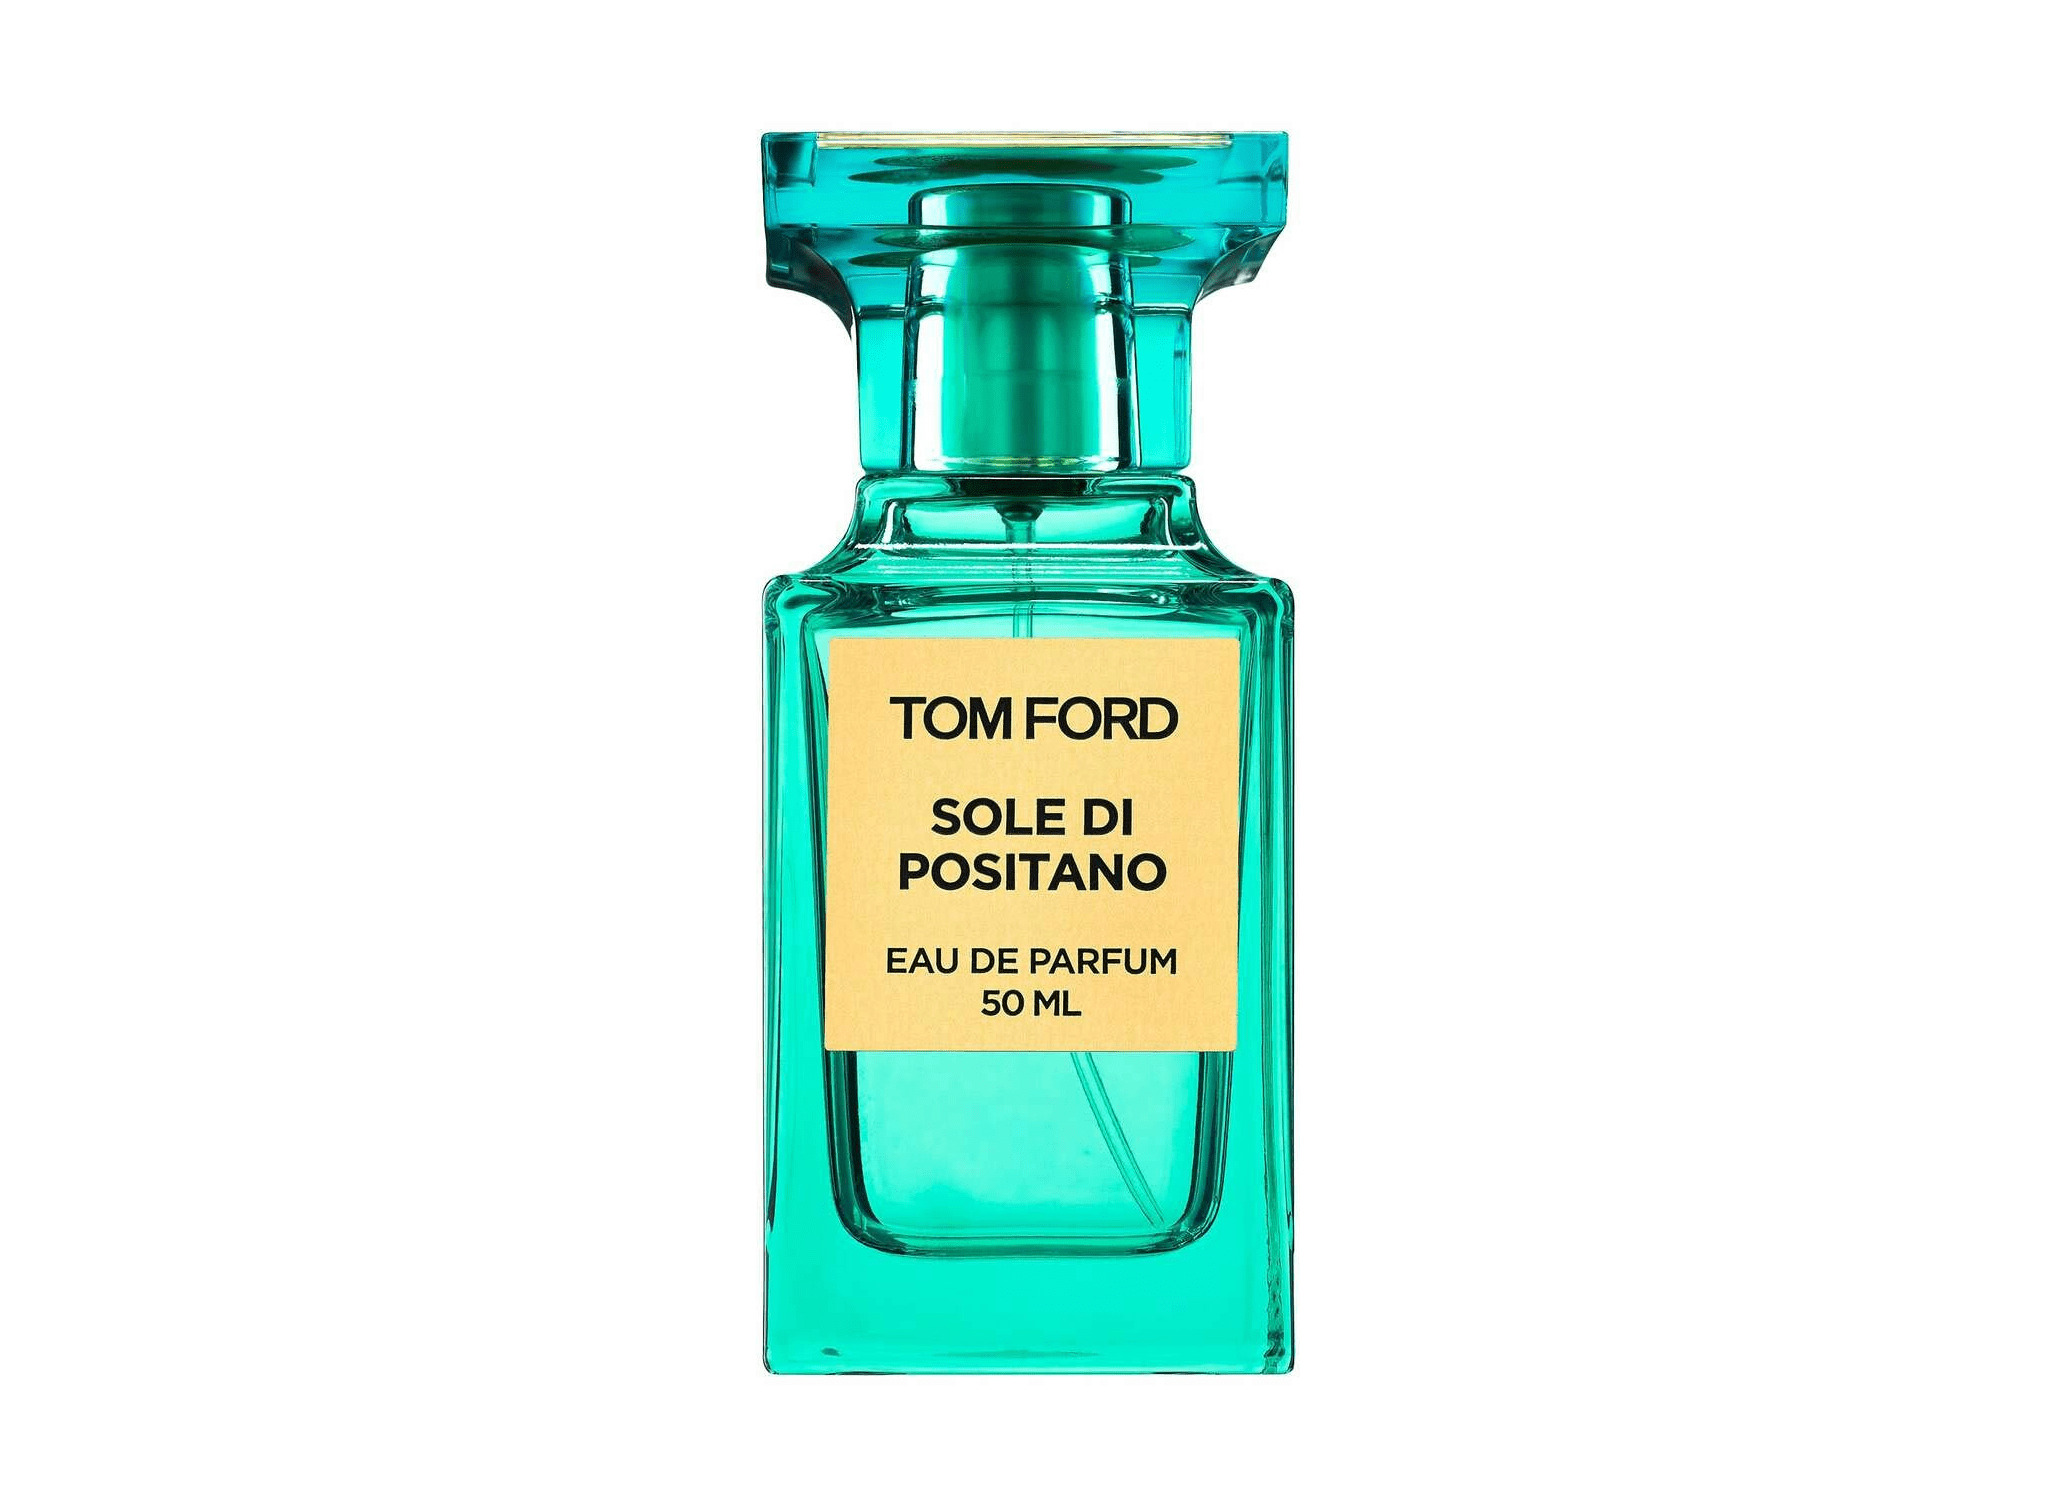 Tom Ford - Sole di Positano, (トムフォード - ソーレ ディ ポジターノ)